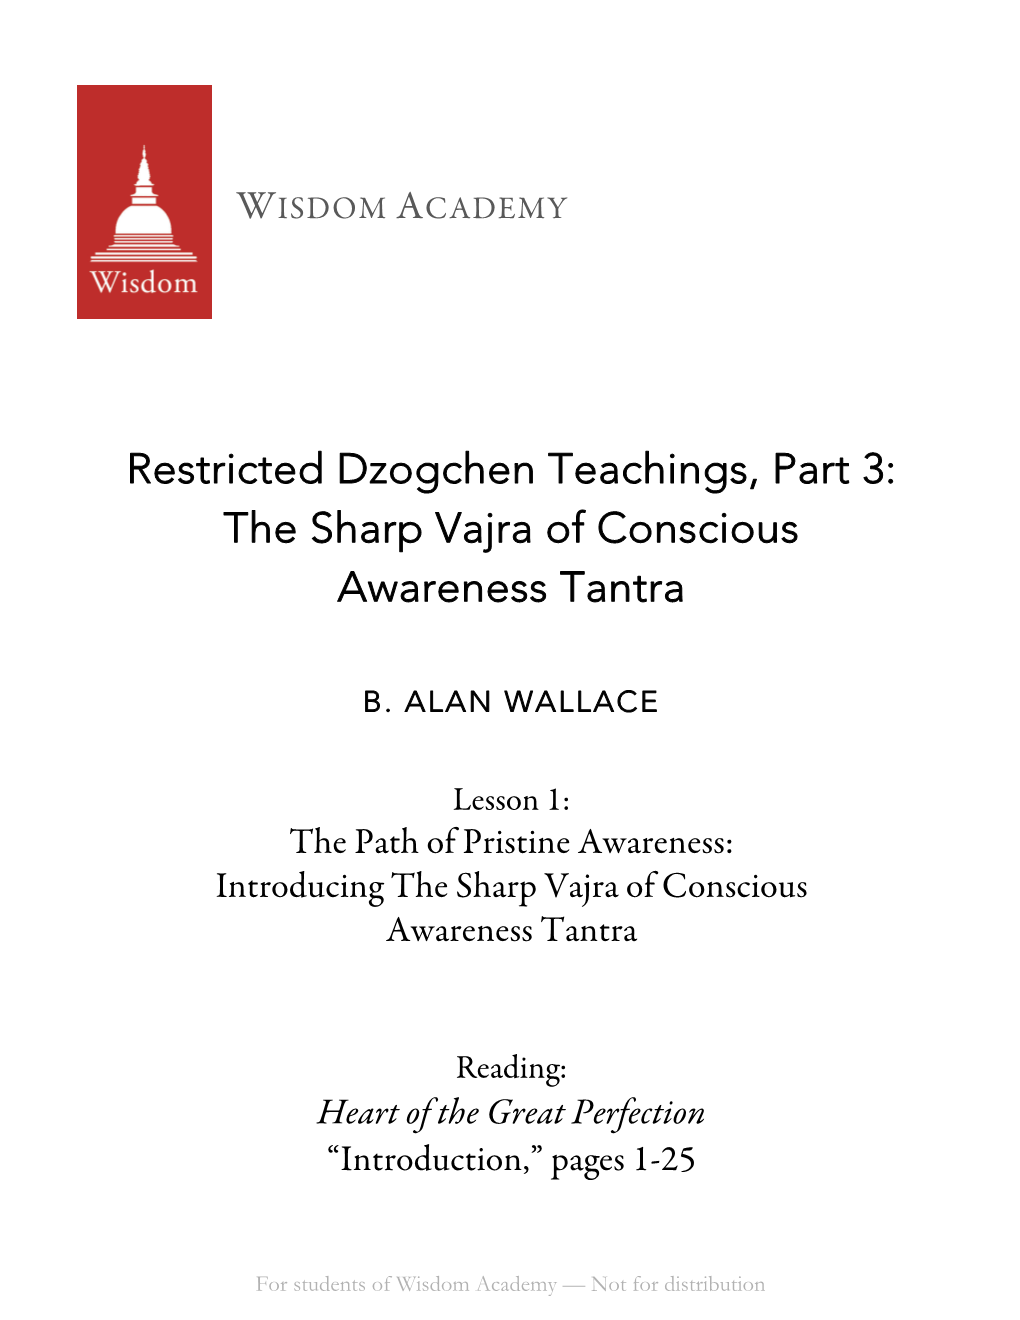 Restricted Dzogchen Teachings, Part 3: the Sharp Vajra of Conscious Awareness Tantra